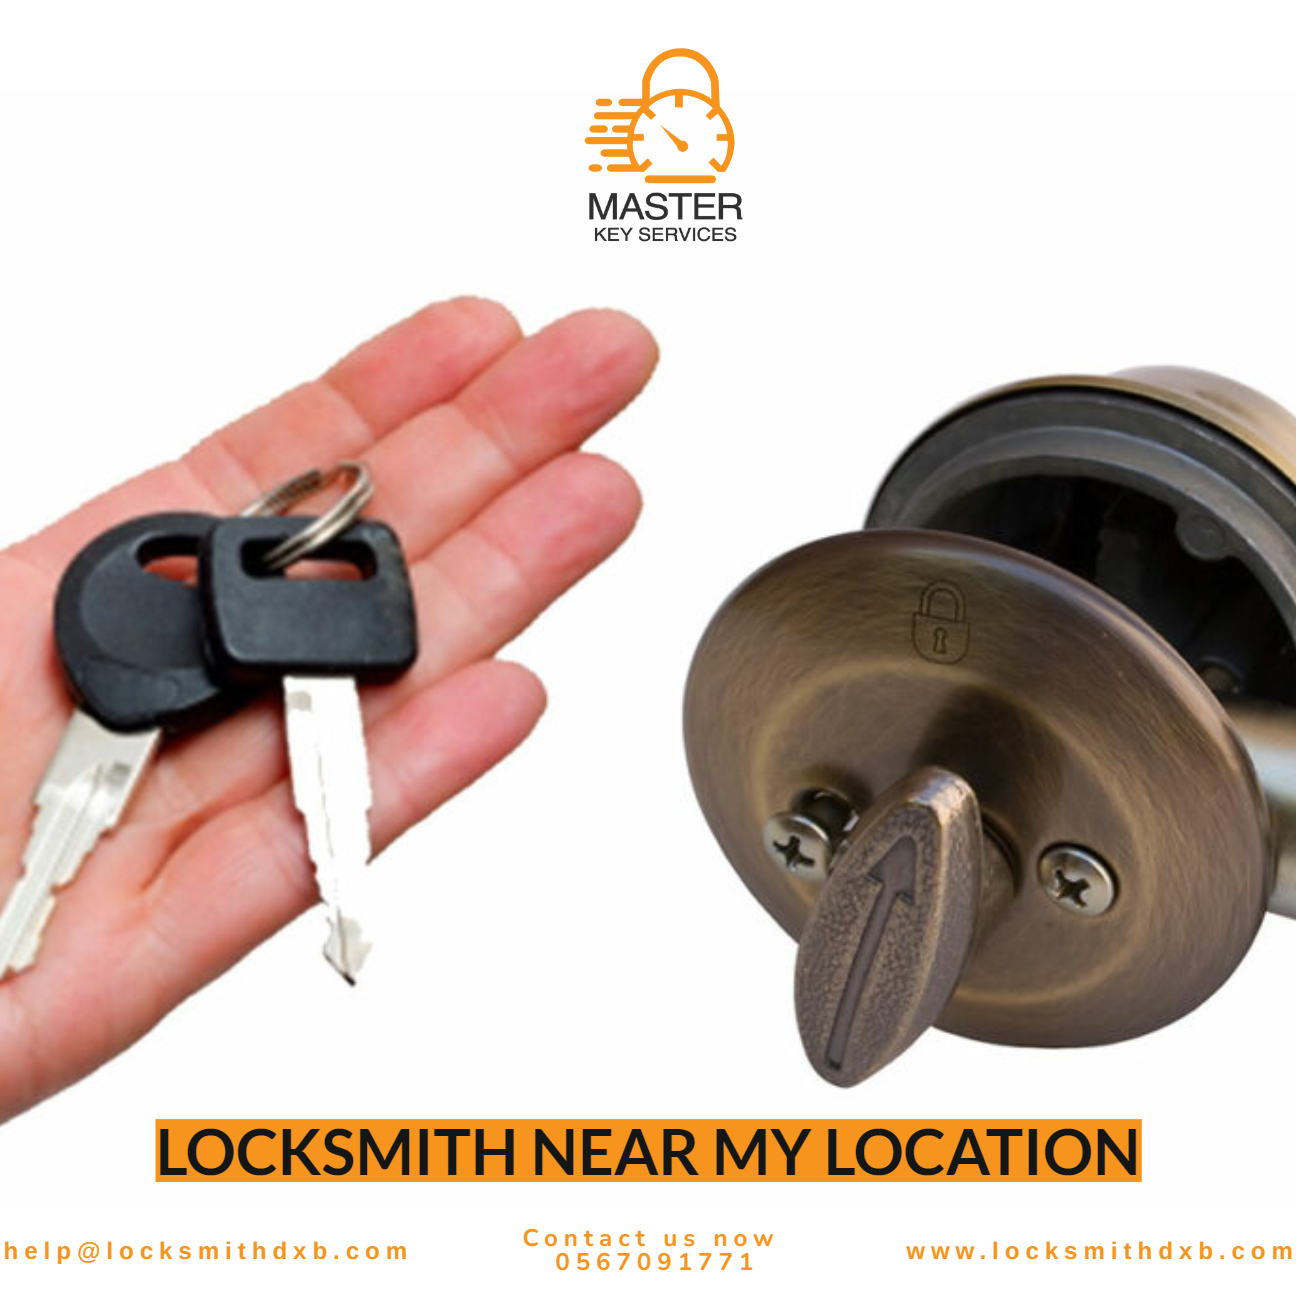 Locksmith near my location